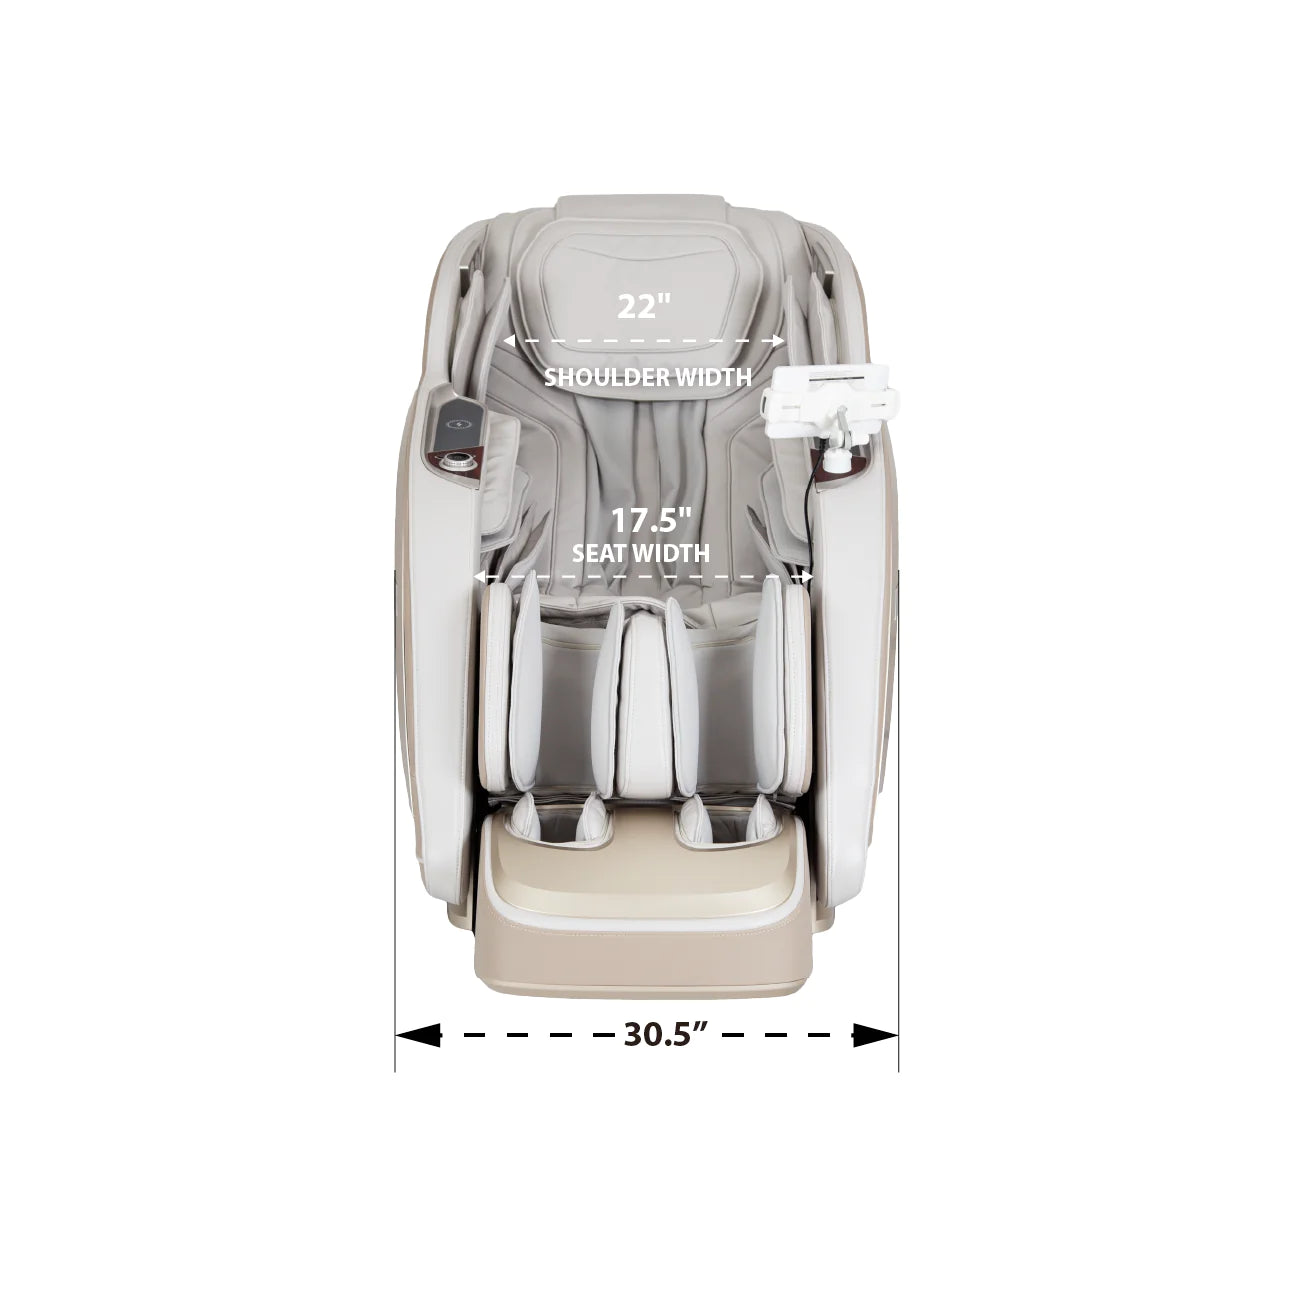 Titan TP-Ronin 4D Massage Chair Dimensions